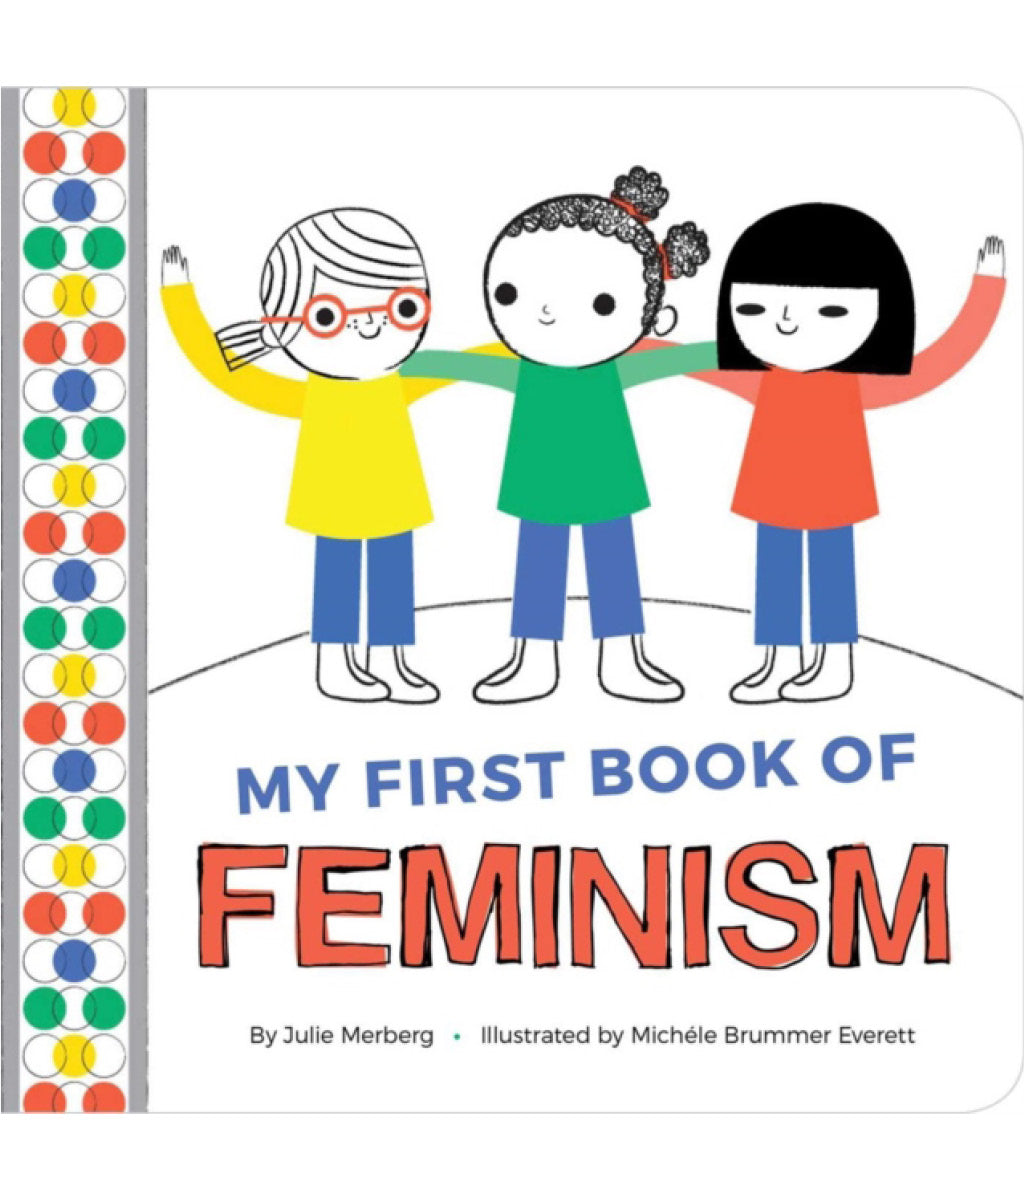 My First Book of Feminism by Julie Merberg